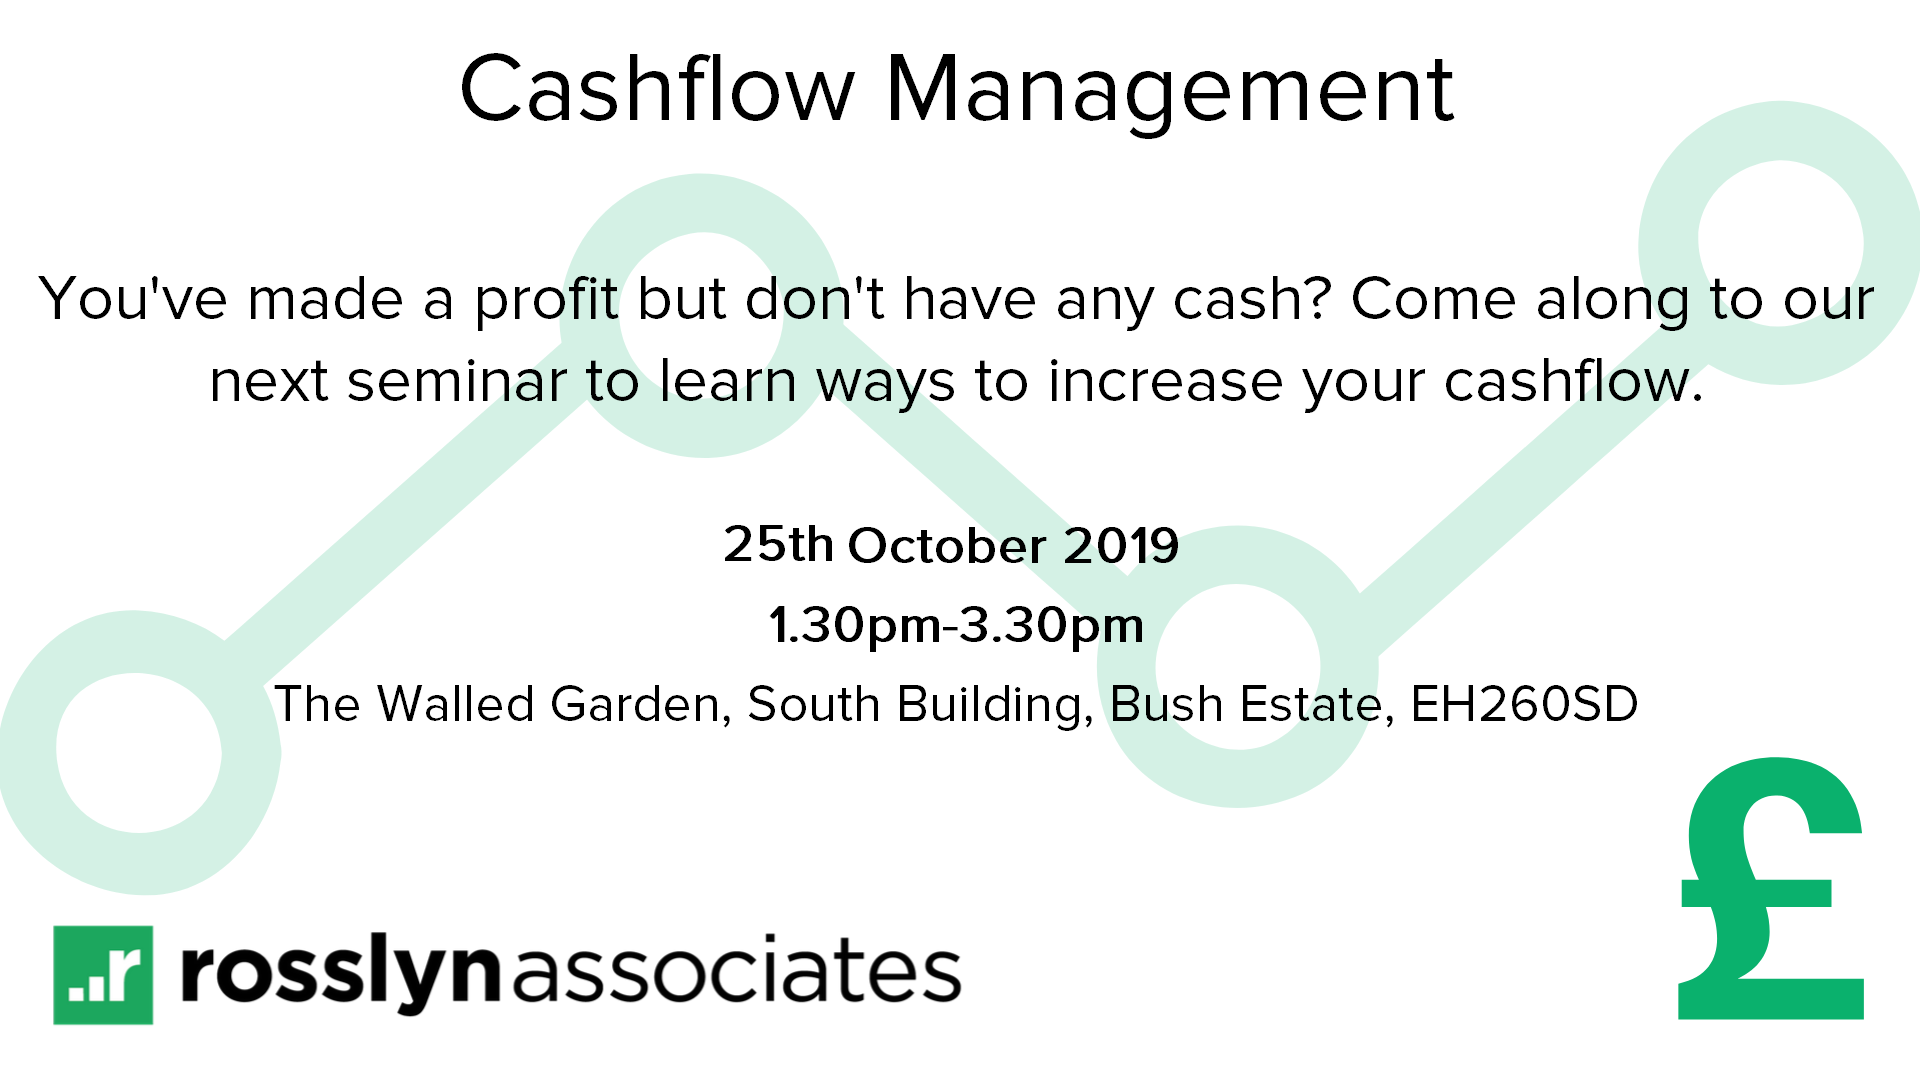 Cashflow Management Seminar